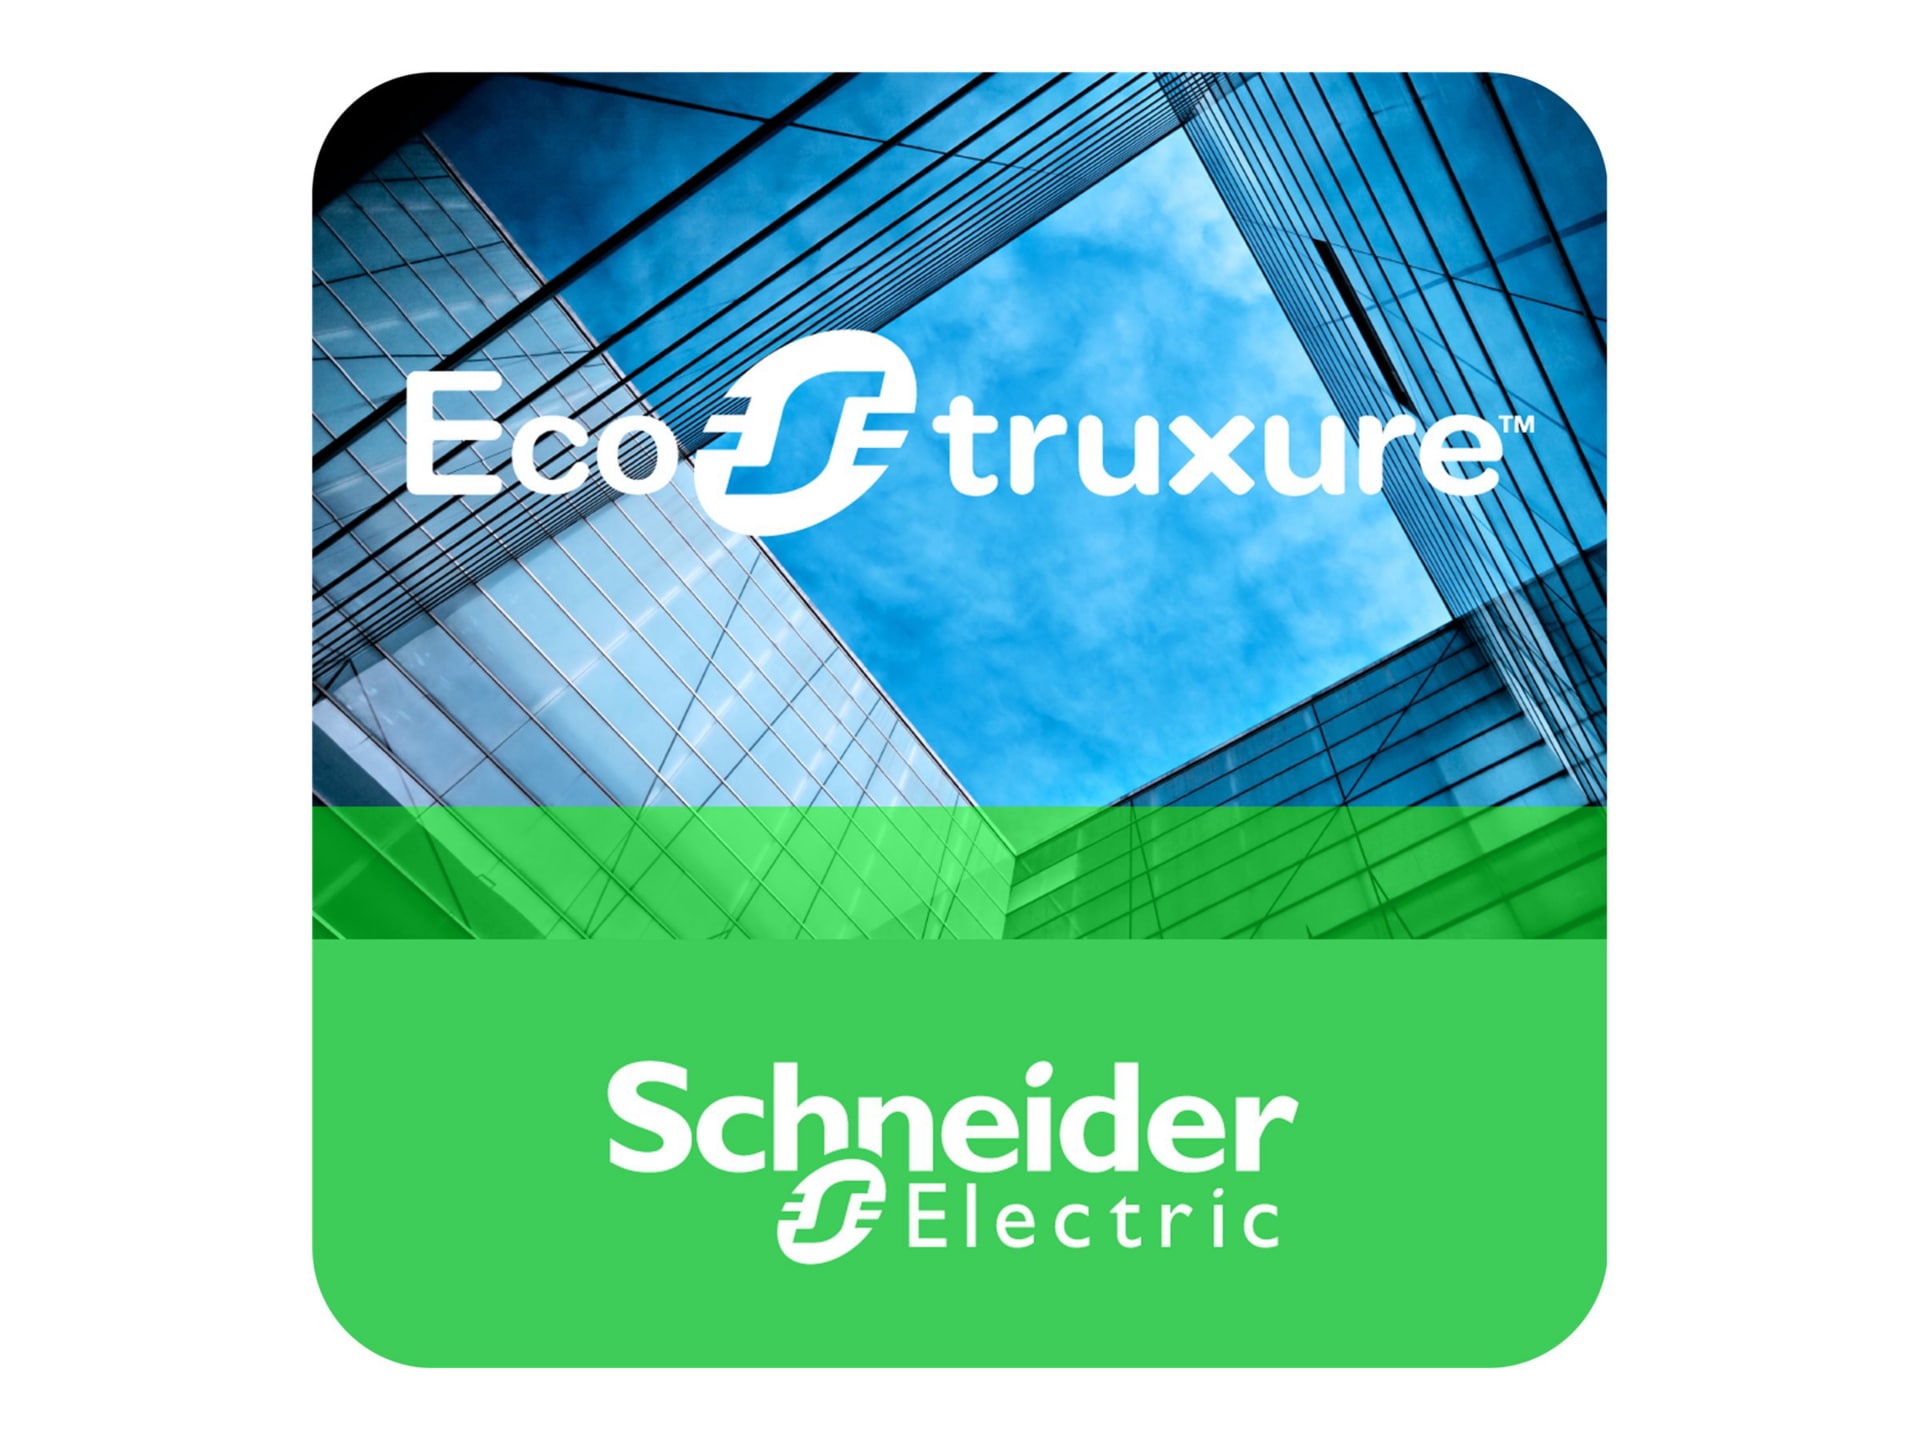 APC by Schneider Electric Digital license, PowerChute Network Shutdown for Virtualization and HCI, 1 year license